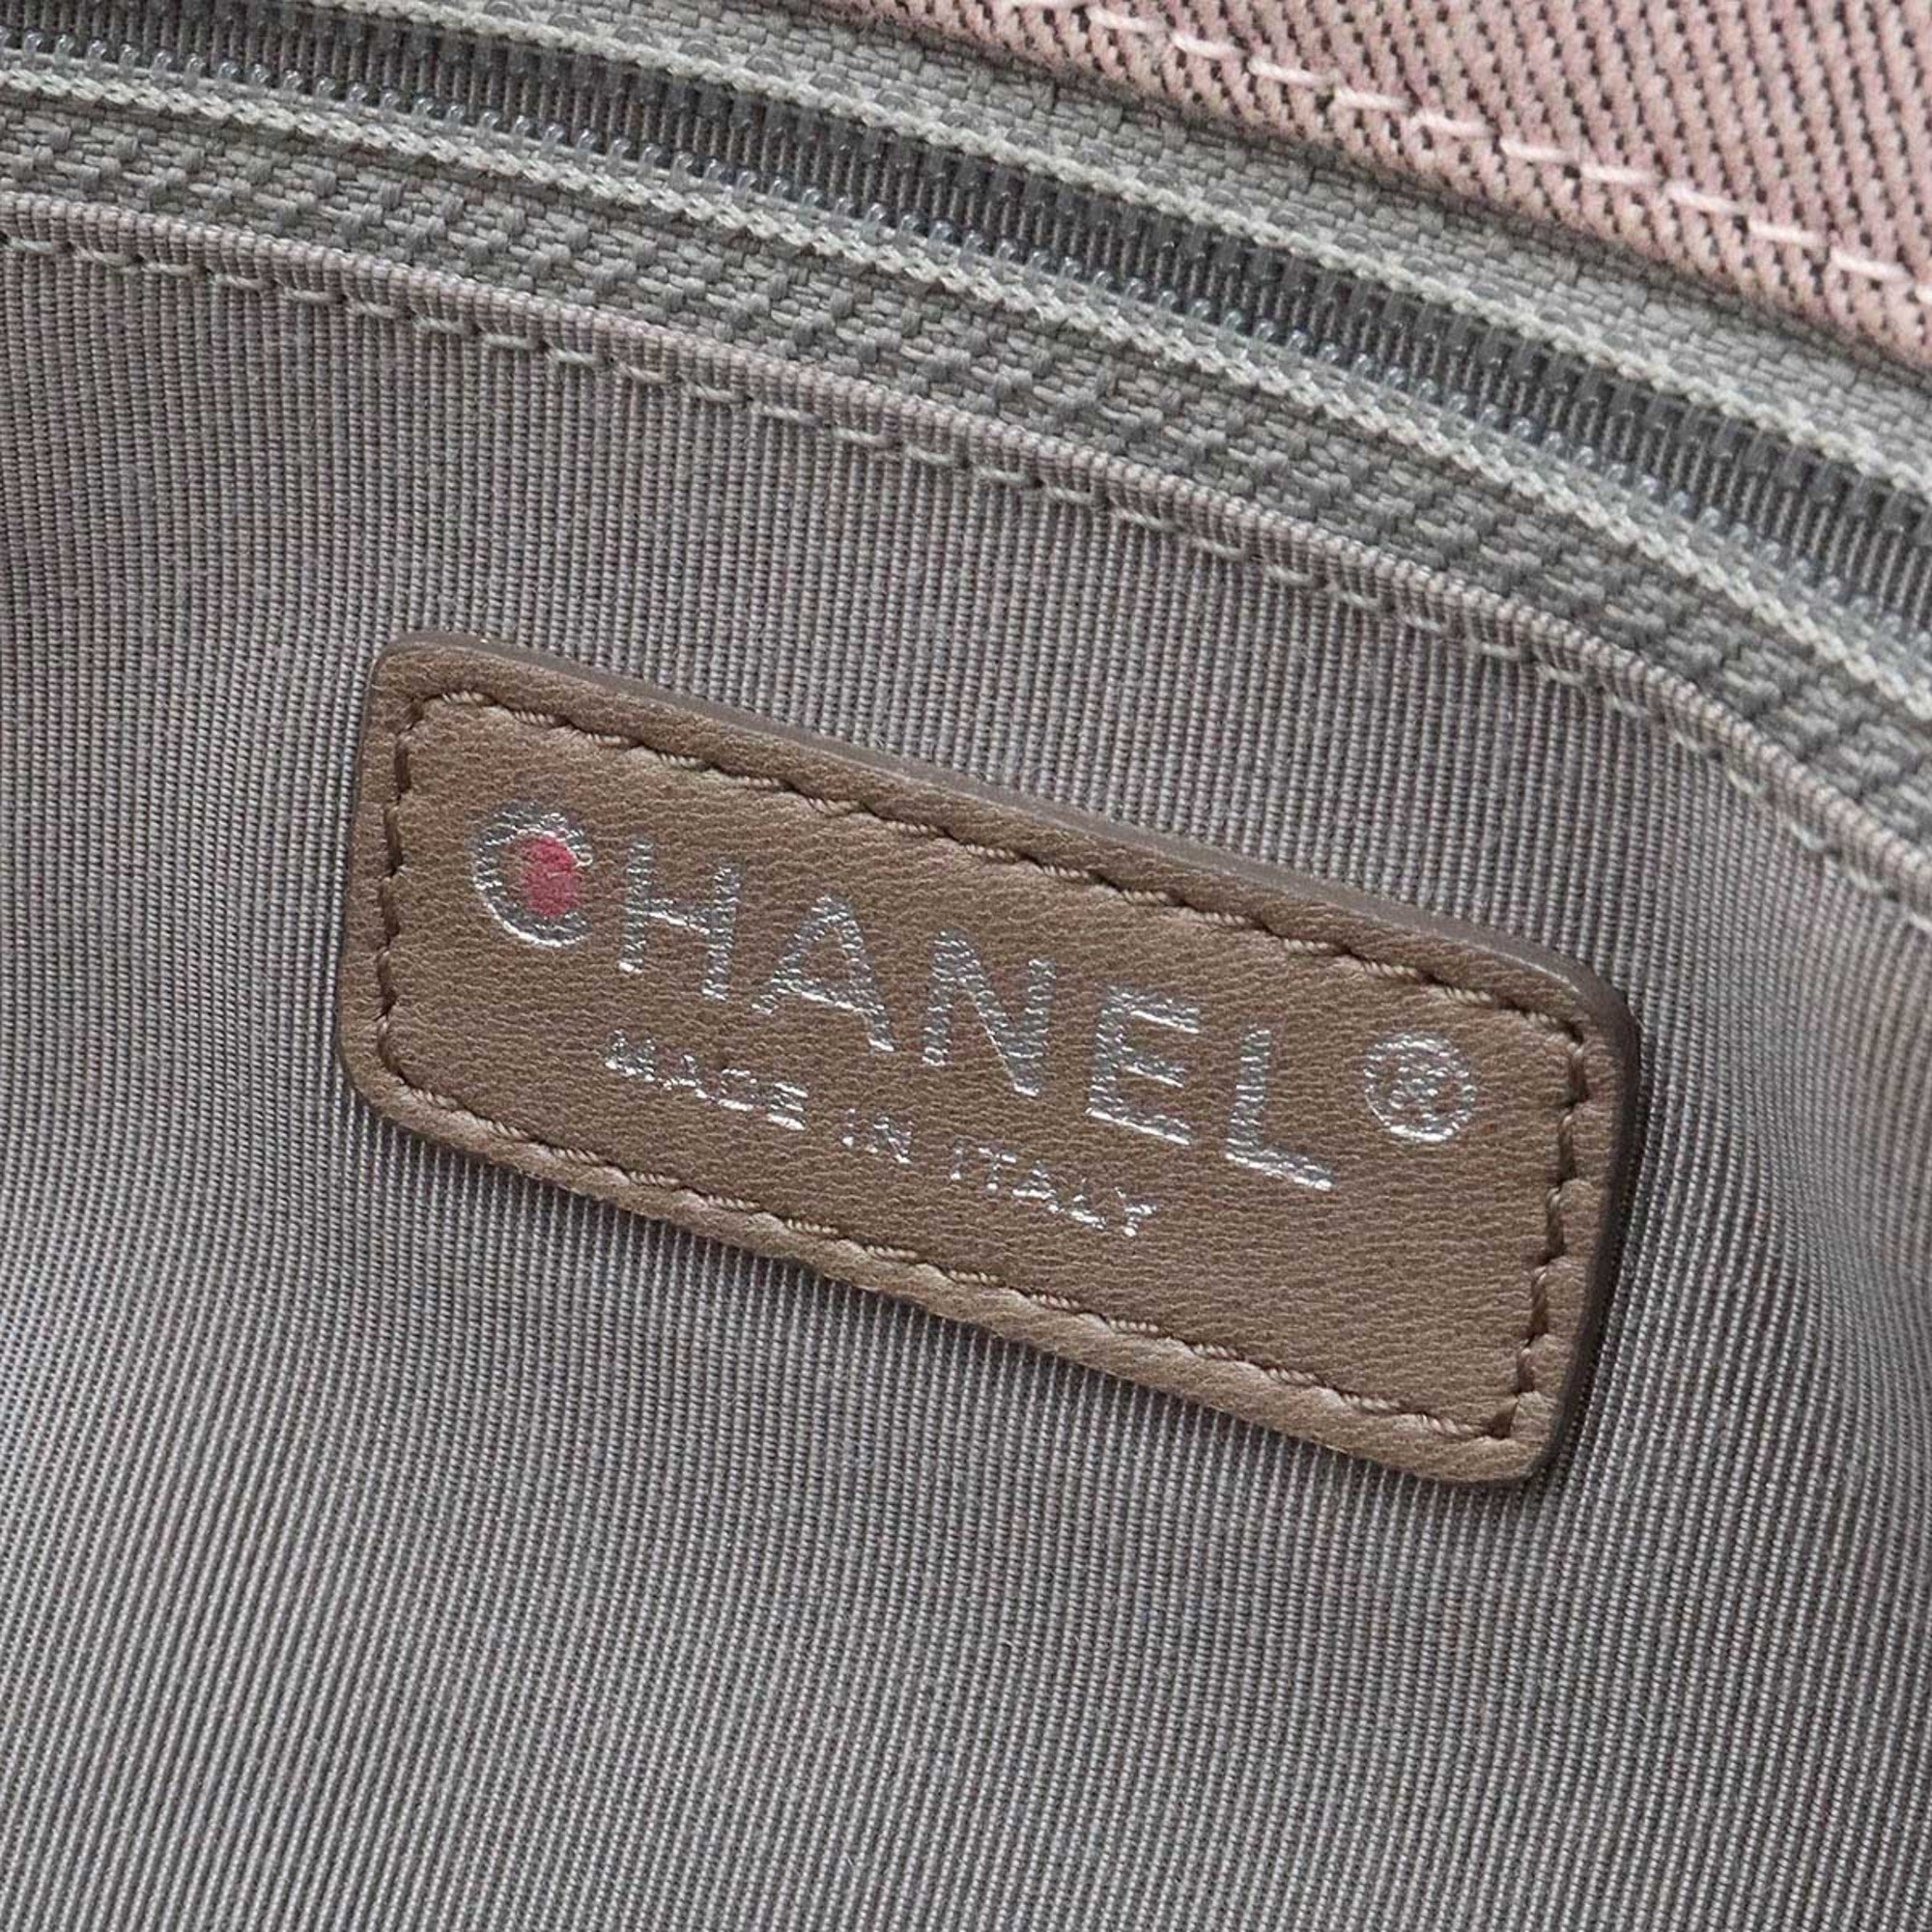 CHANEL Chanel Matelasse Coco Mark Handbag Tote Bag Canvas Leather Mauve Pink 6885